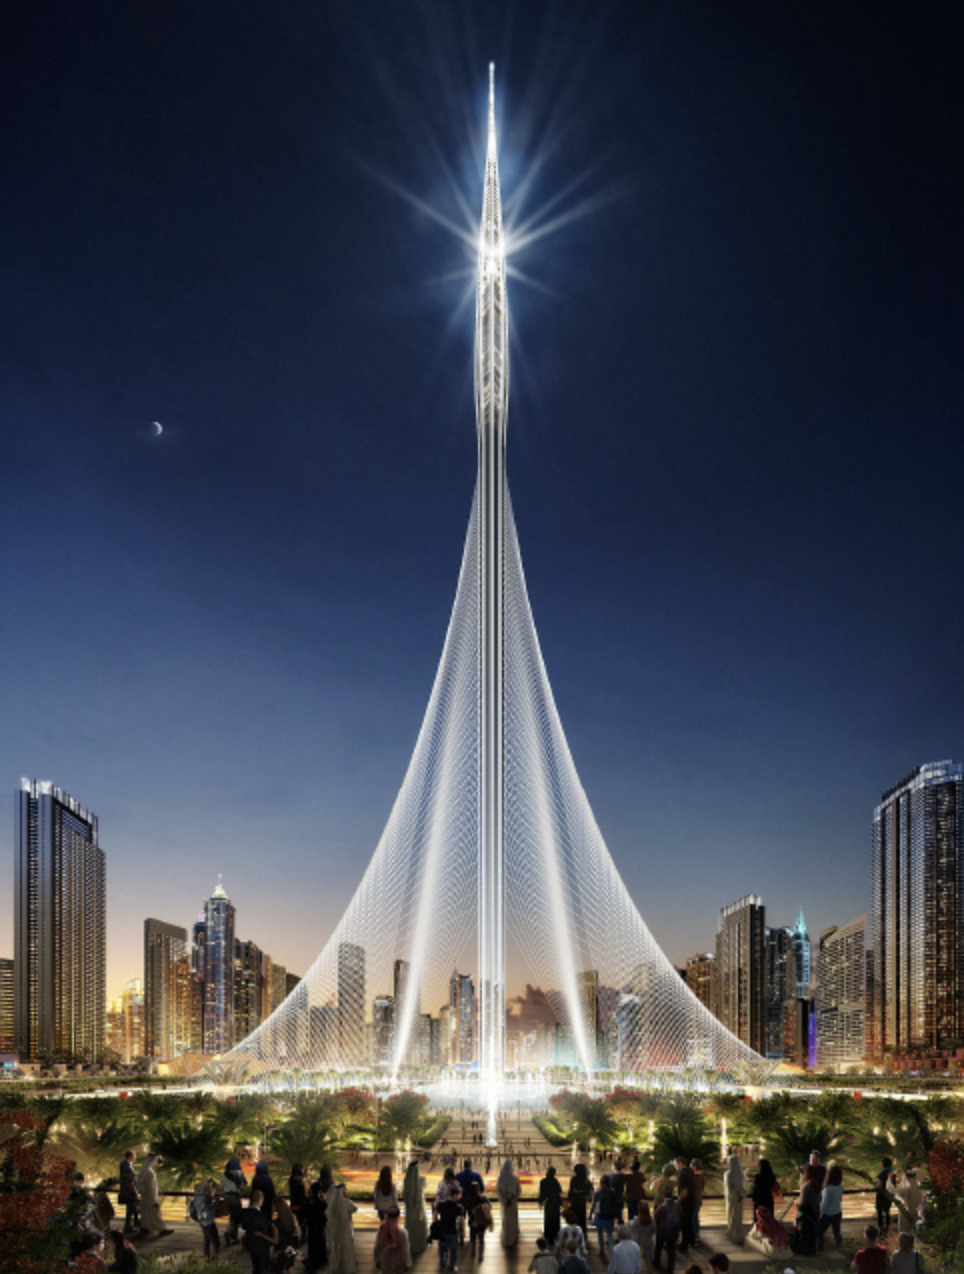 The Dubai Creek Tower